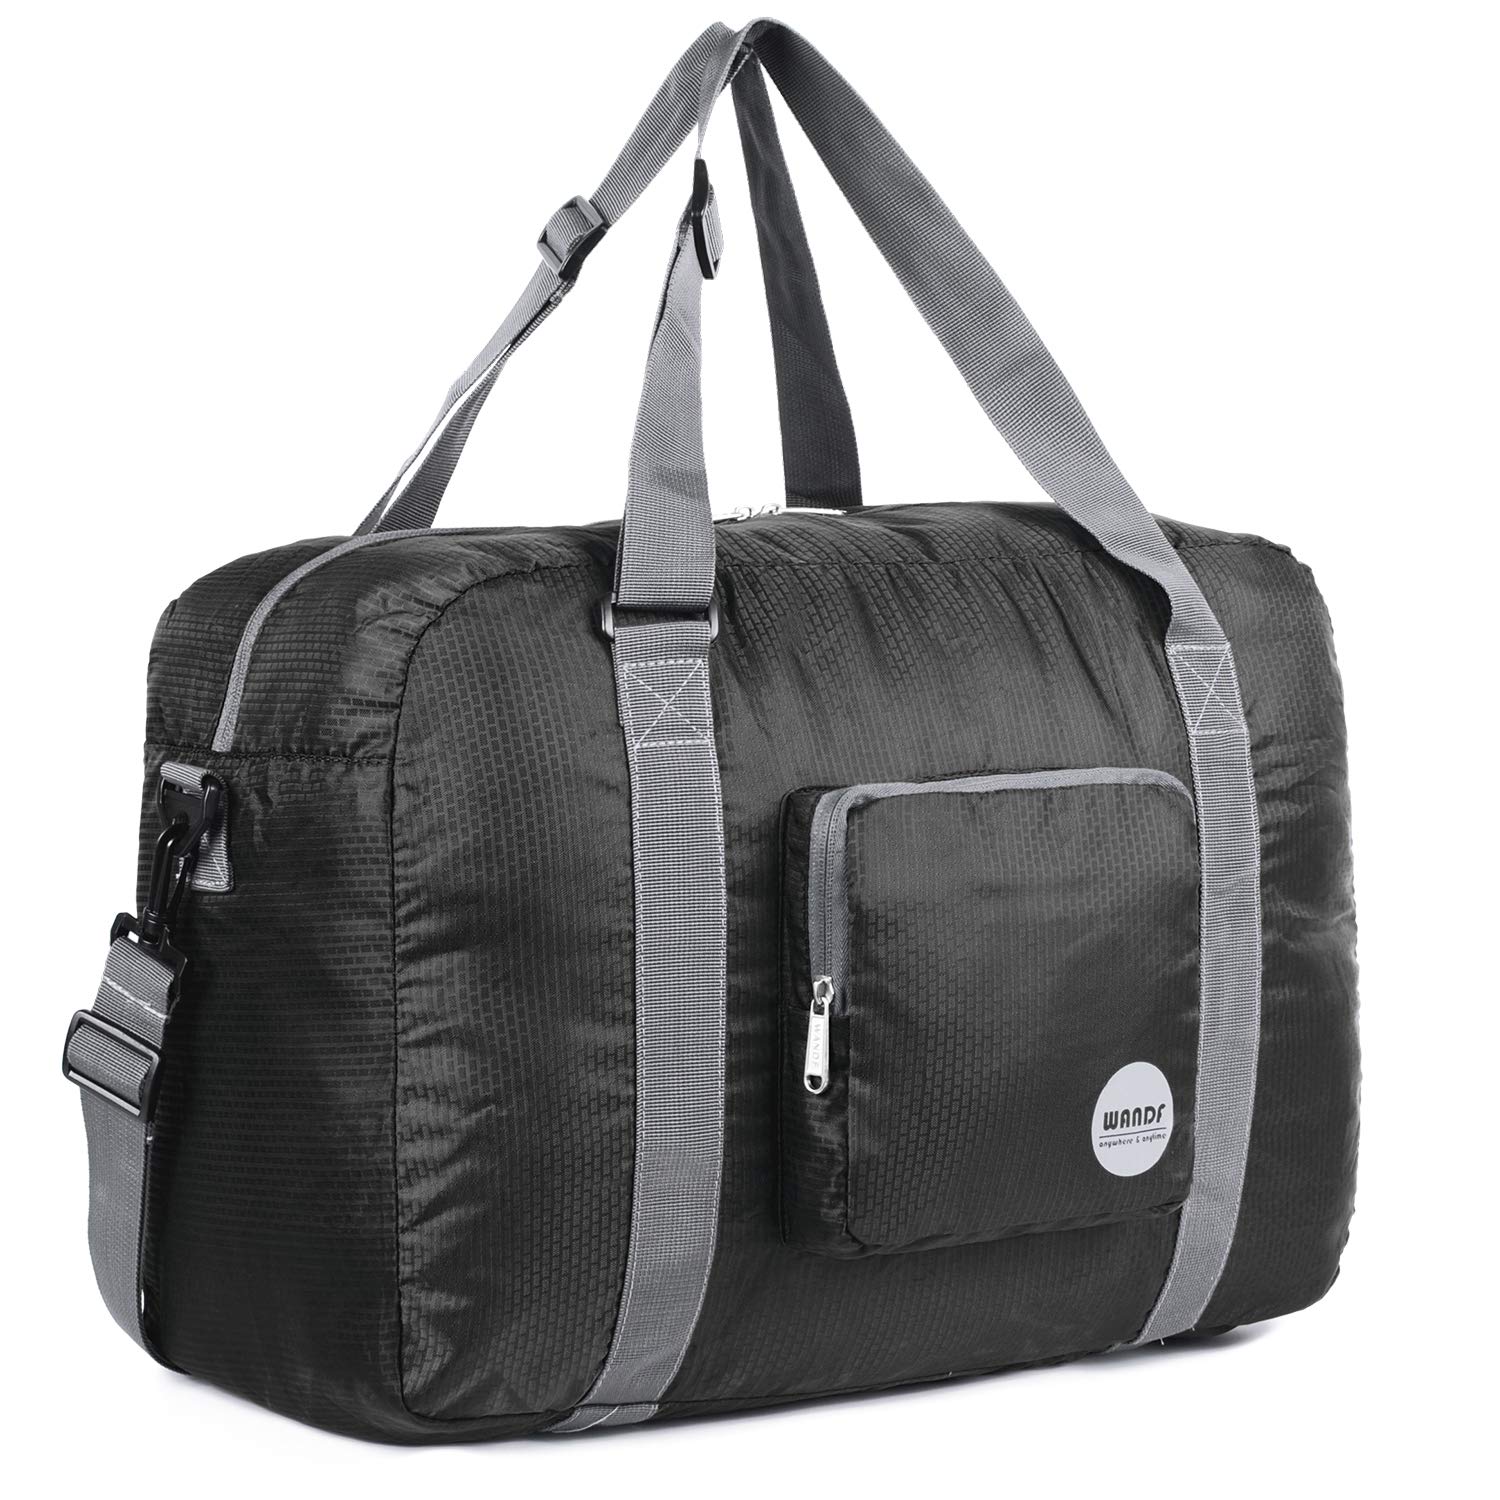 Kapow Meggings Duffel Bag For Gym Travel